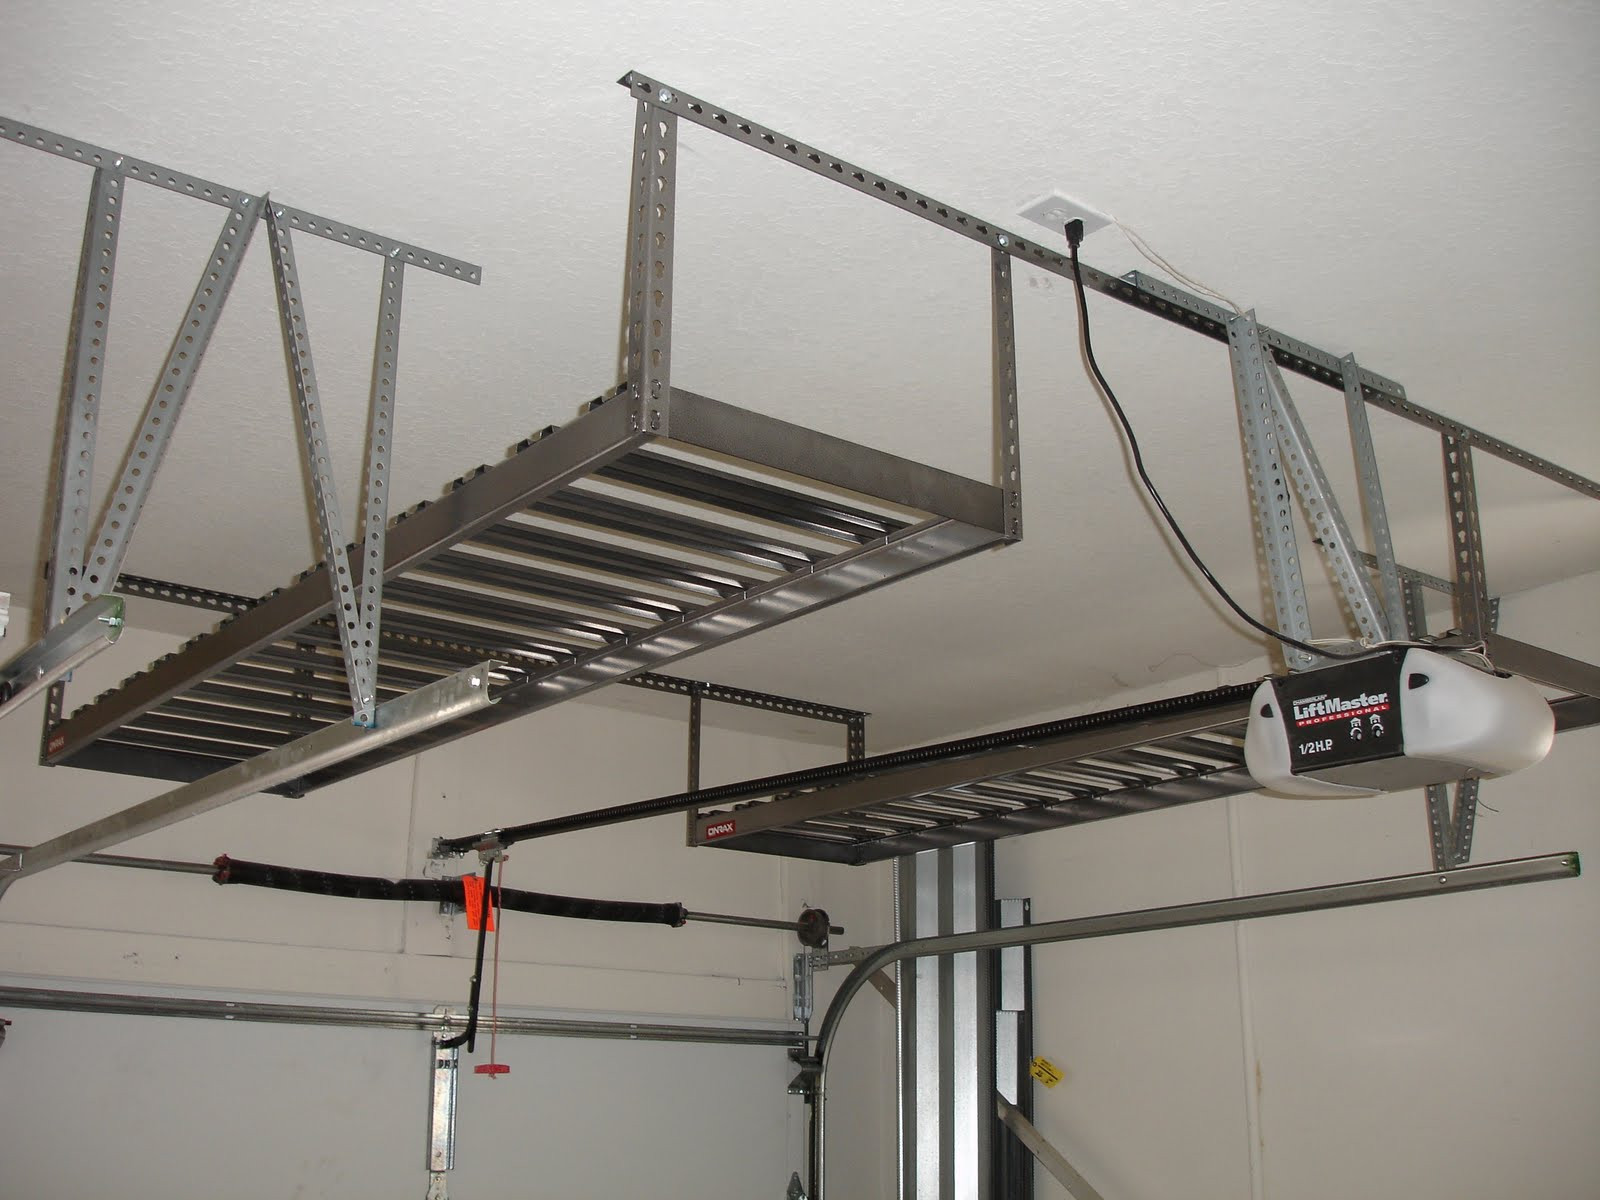 Best ideas about Garage Hanging Storage
. Save or Pin Hanging Ceiling DIY Custom Overhead Garage Storage Rack Now.